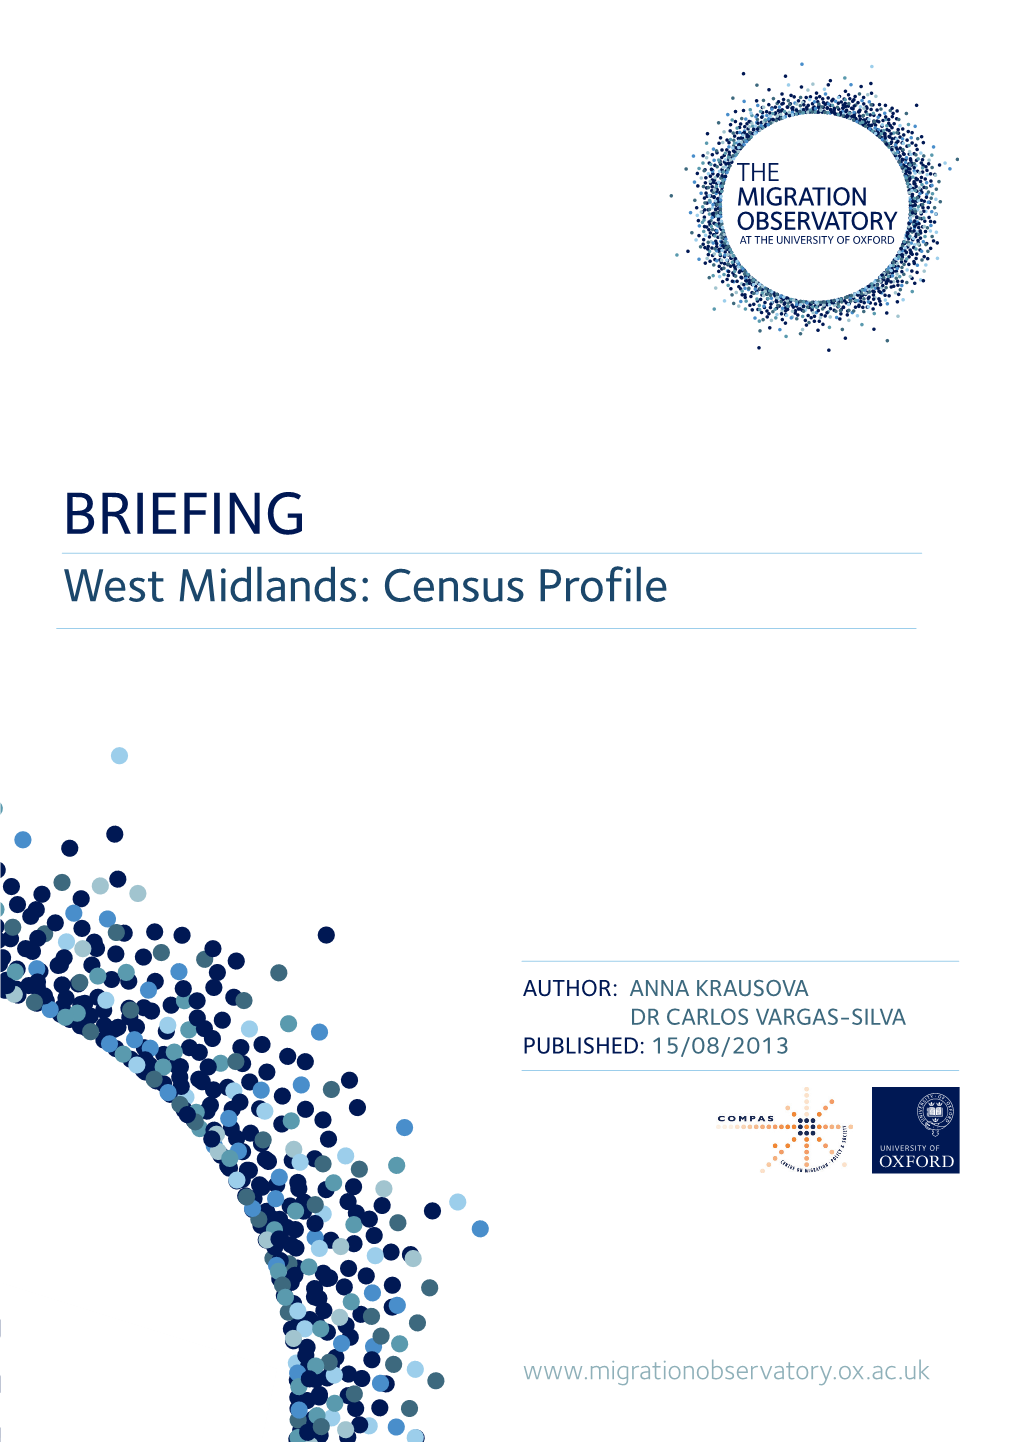 BRIEFING West Midlands: Census Profile